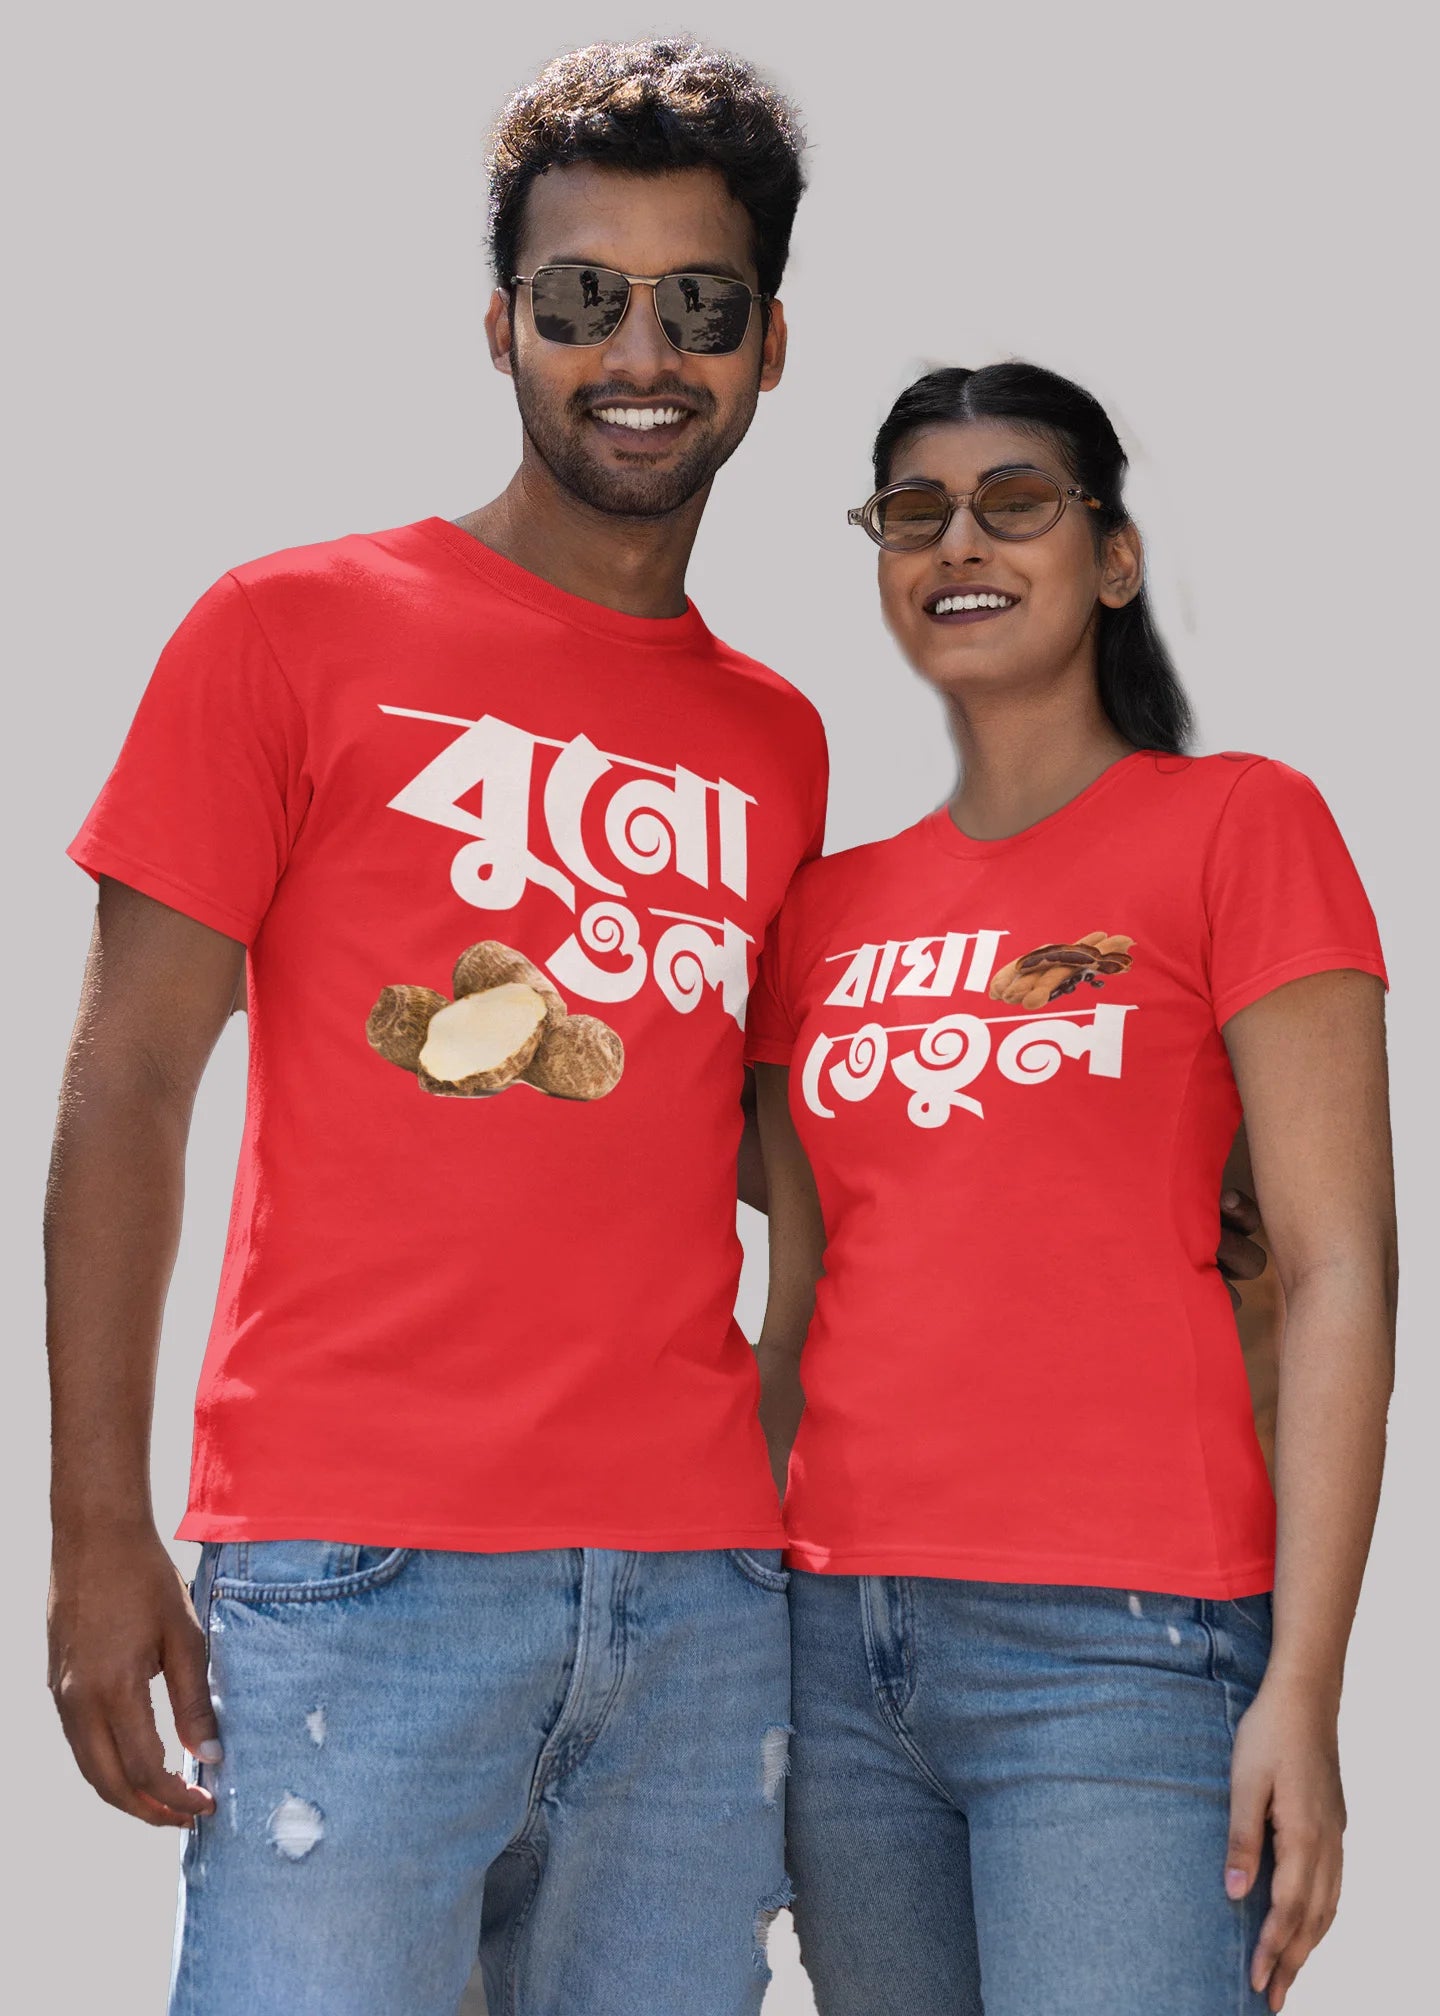 Buno ol baga tetul bengali Printed Couple T-shirt